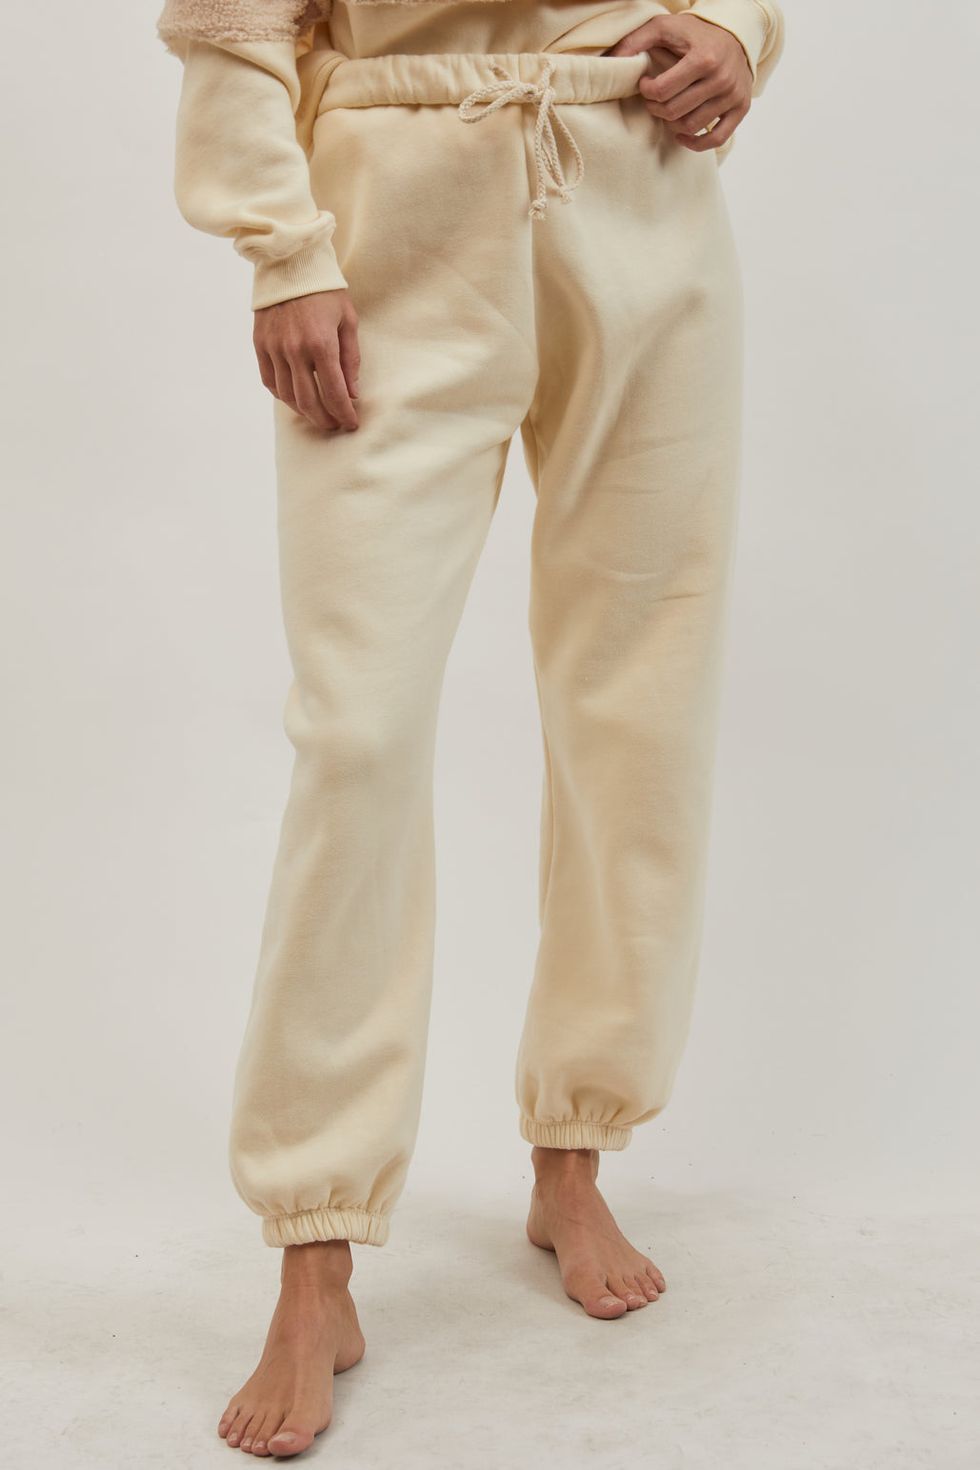 Women's Thick Fleece Lined Pants Long Trousers Warm Sweatpants